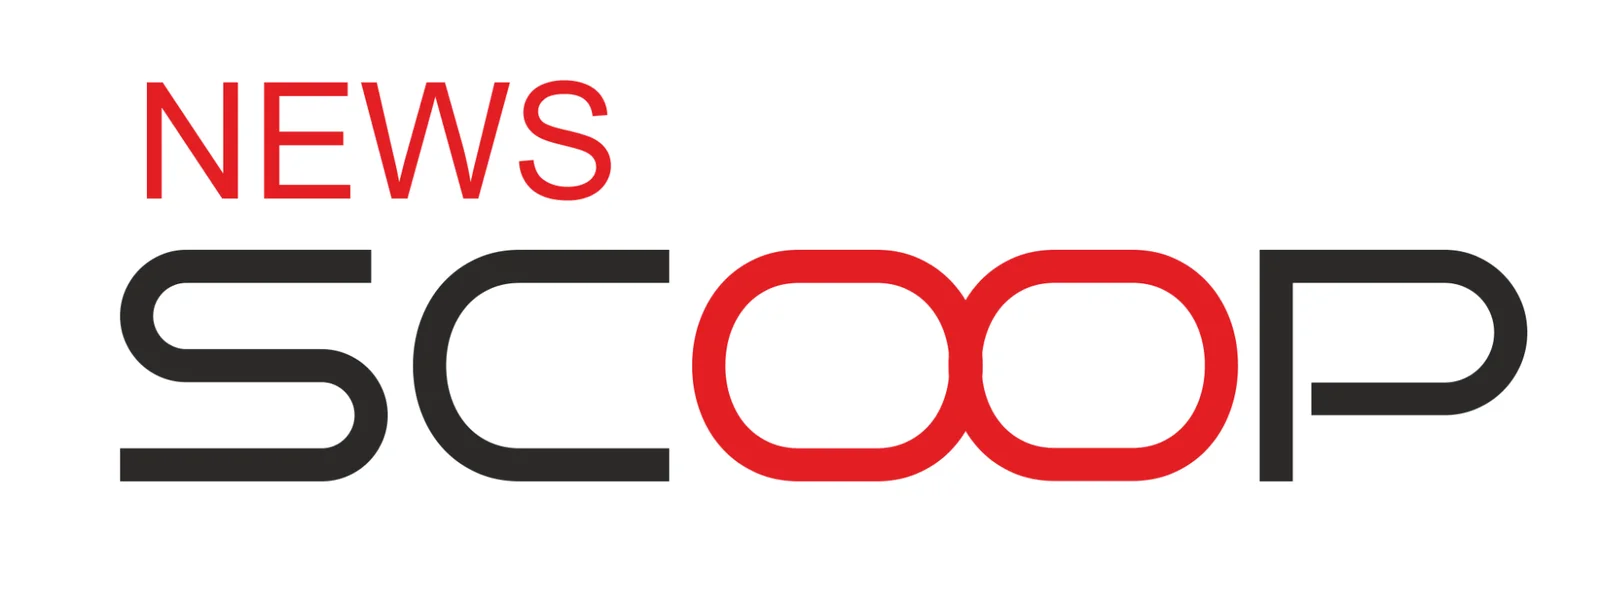 news-scoop-logo